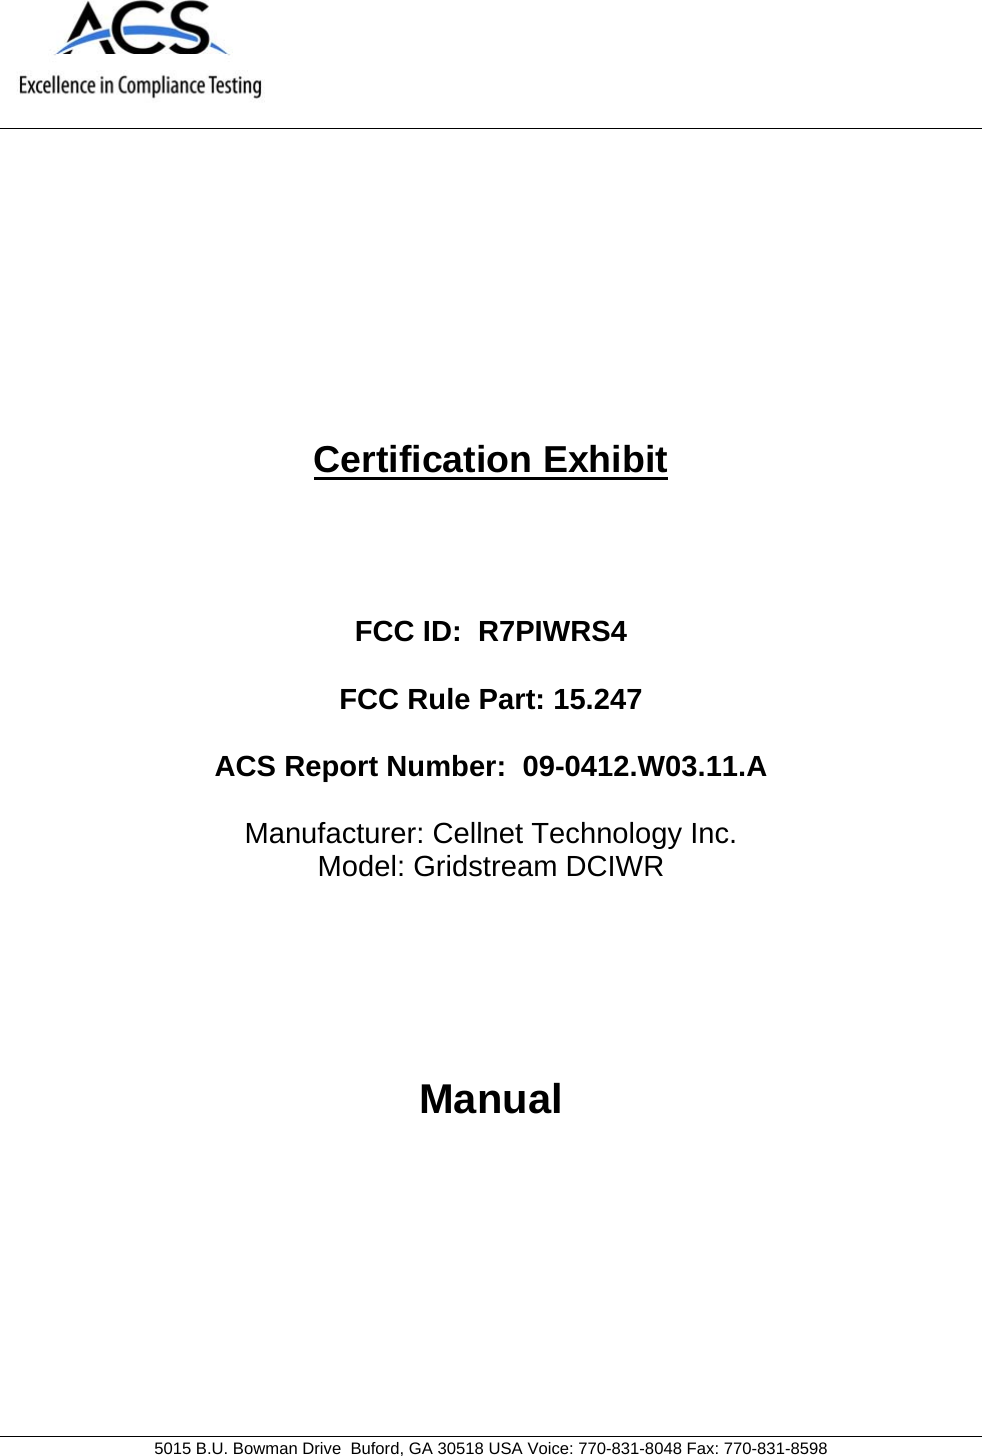     5015 B.U. Bowman Drive  Buford, GA 30518 USA Voice: 770-831-8048 Fax: 770-831-8598   Certification Exhibit     FCC ID:  R7PIWRS4  FCC Rule Part: 15.247  ACS Report Number:  09-0412.W03.11.A   Manufacturer: Cellnet Technology Inc. Model: Gridstream DCIWR     Manual 